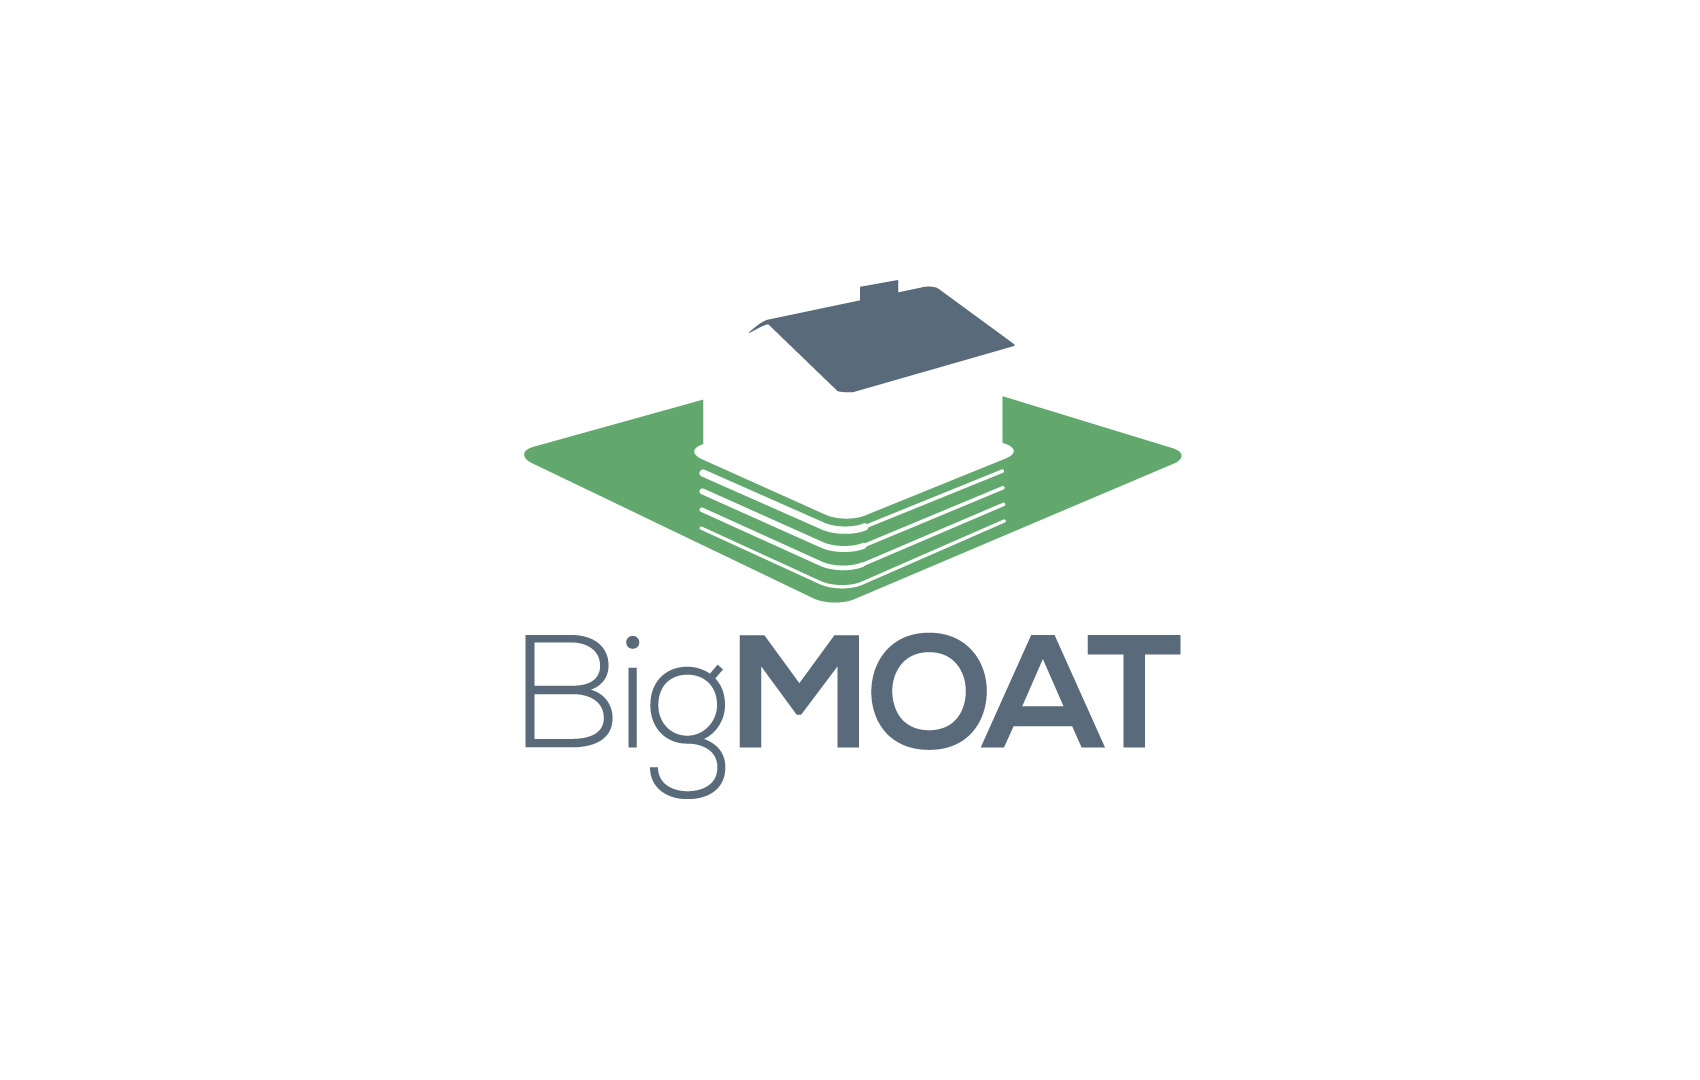 Logotype Design for Big Moat